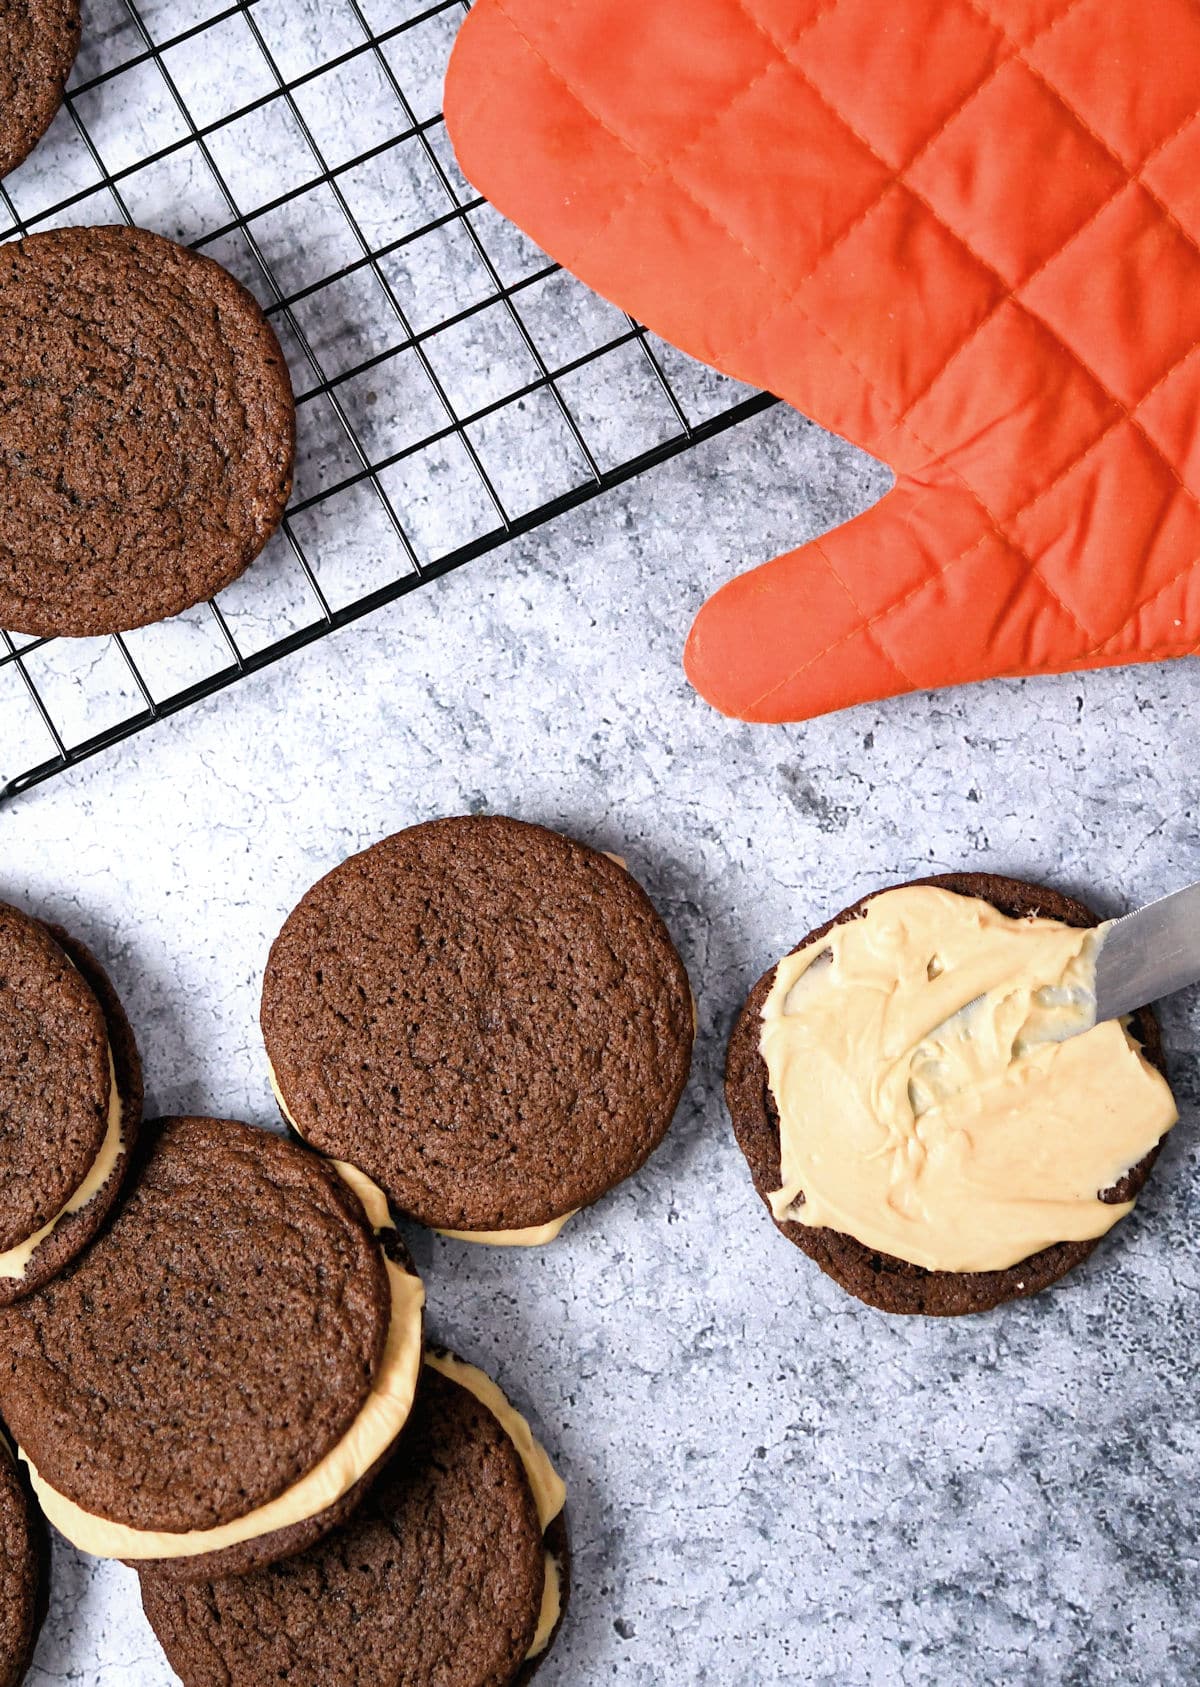 24Bite: Chocolate Sandwich Cookies with Peanut Butter recipe by Christian Guzman